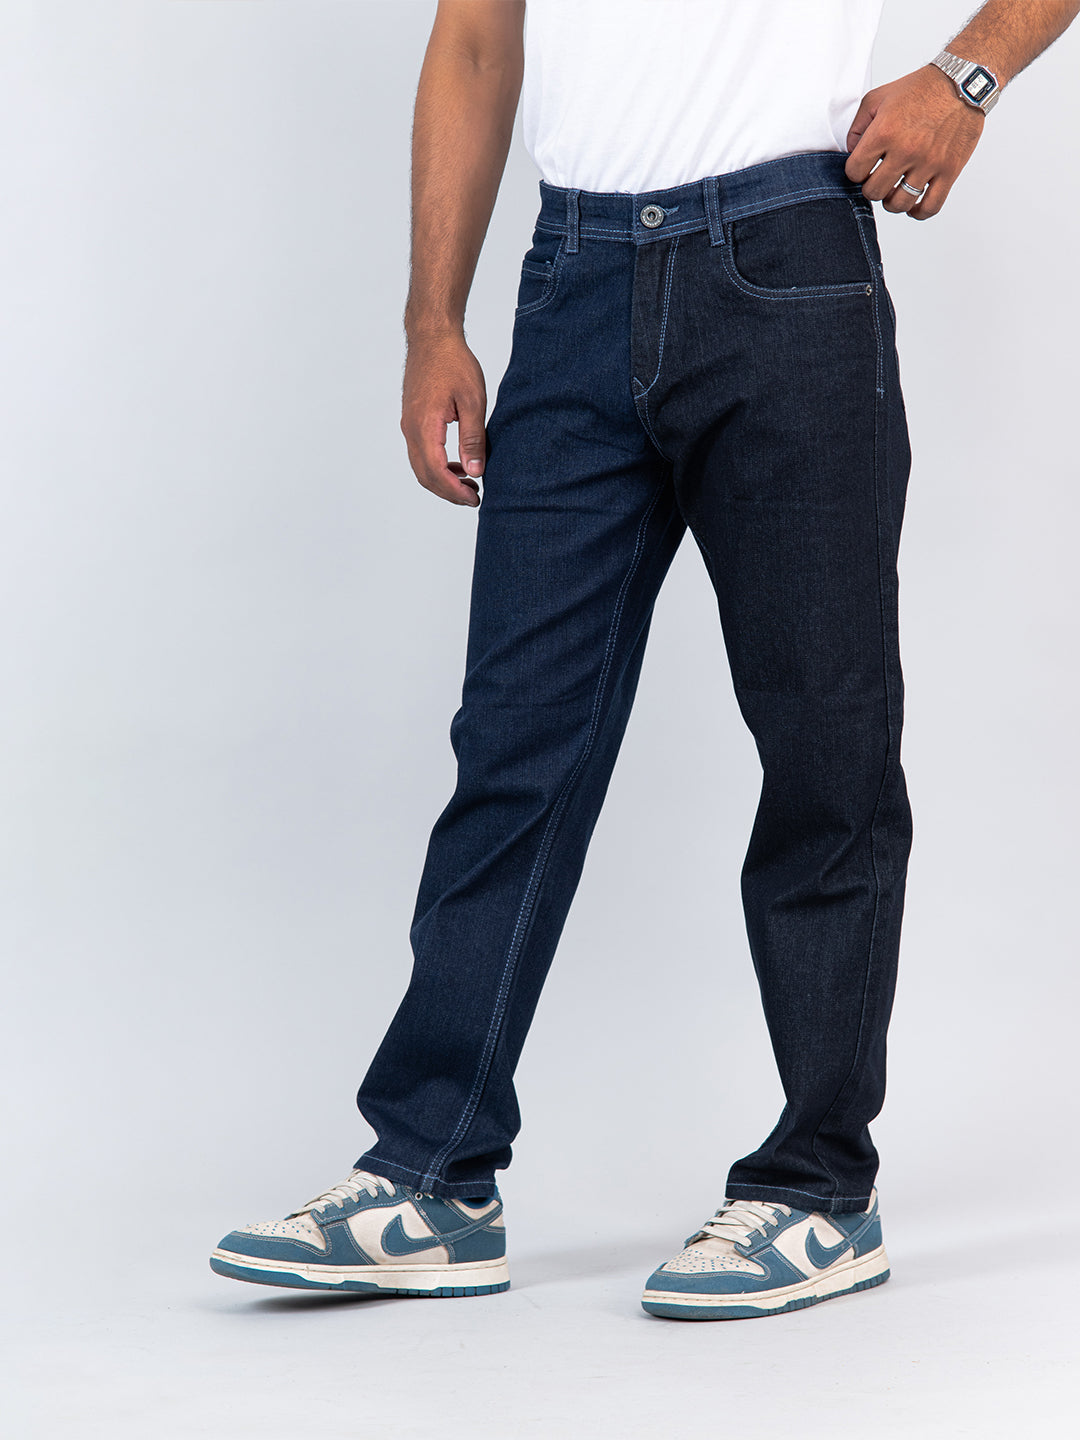 Pepe Jeans Slim Women Blue Jeans - Buy Pepe Jeans Slim Women Blue Jeans  Online at Best Prices in India | Flipkart.com